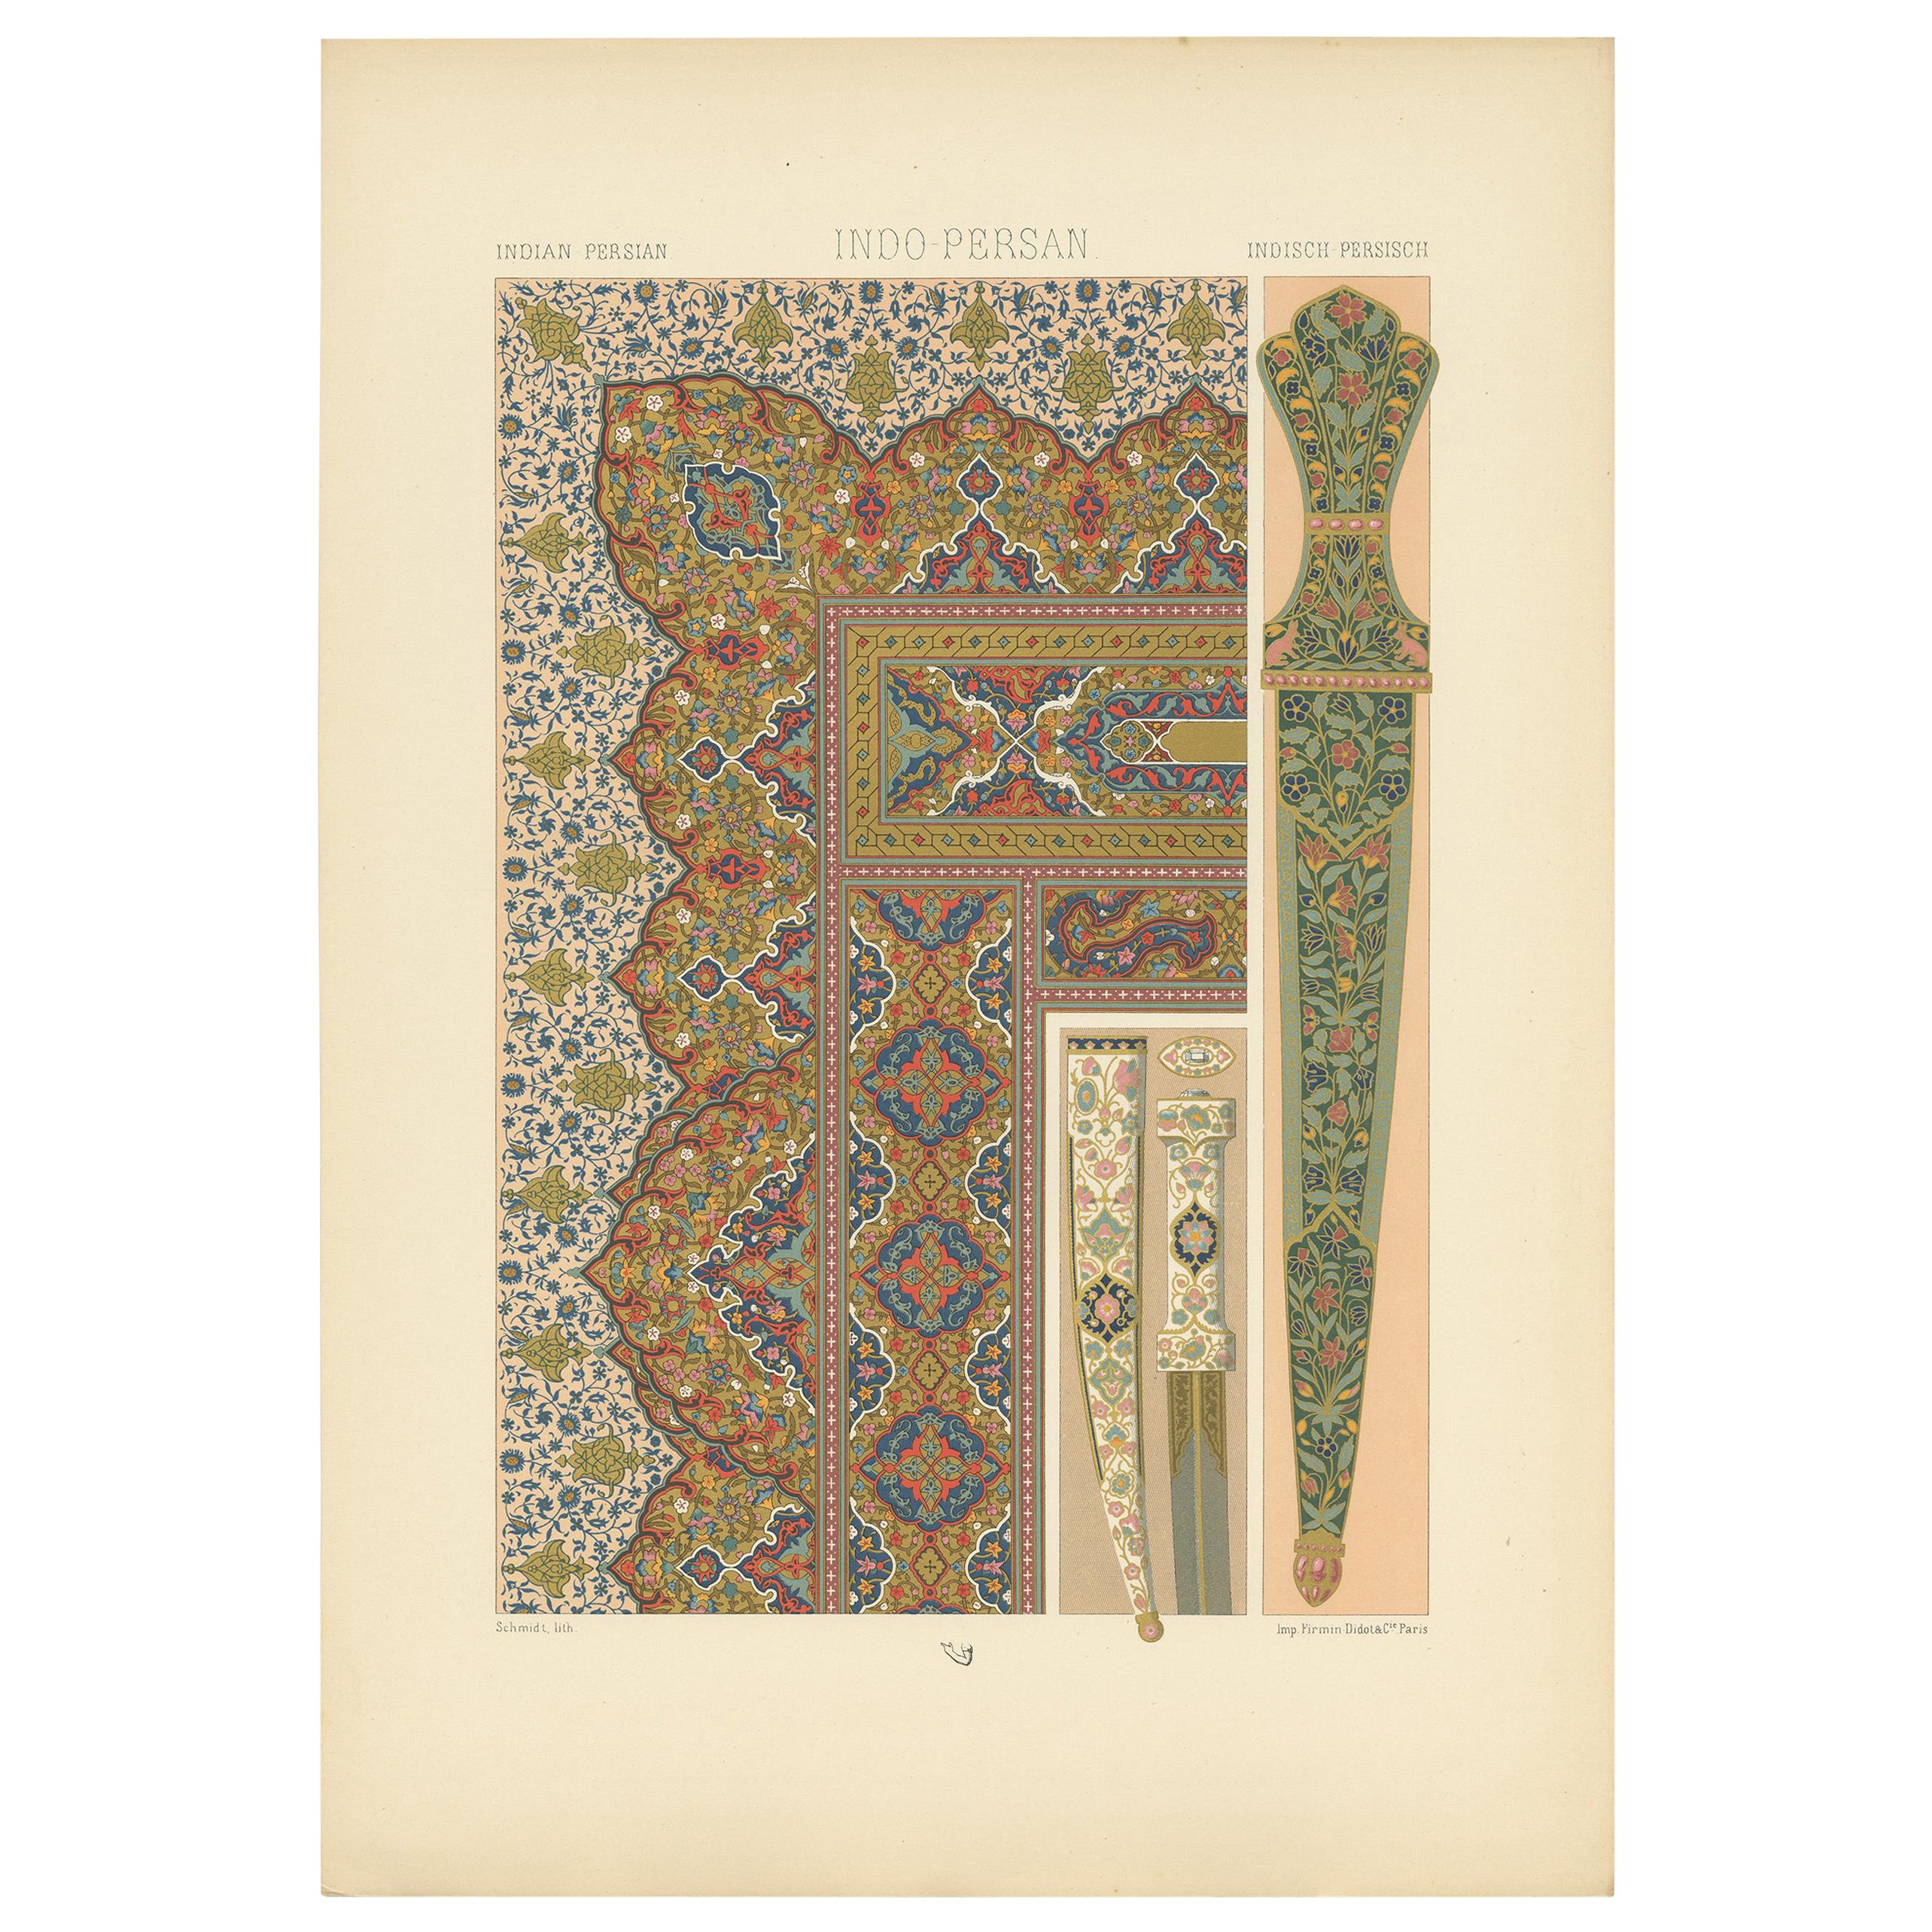 Rare Antique Print of Indo Persian Koran Decoration in Stunning Colors,  1890